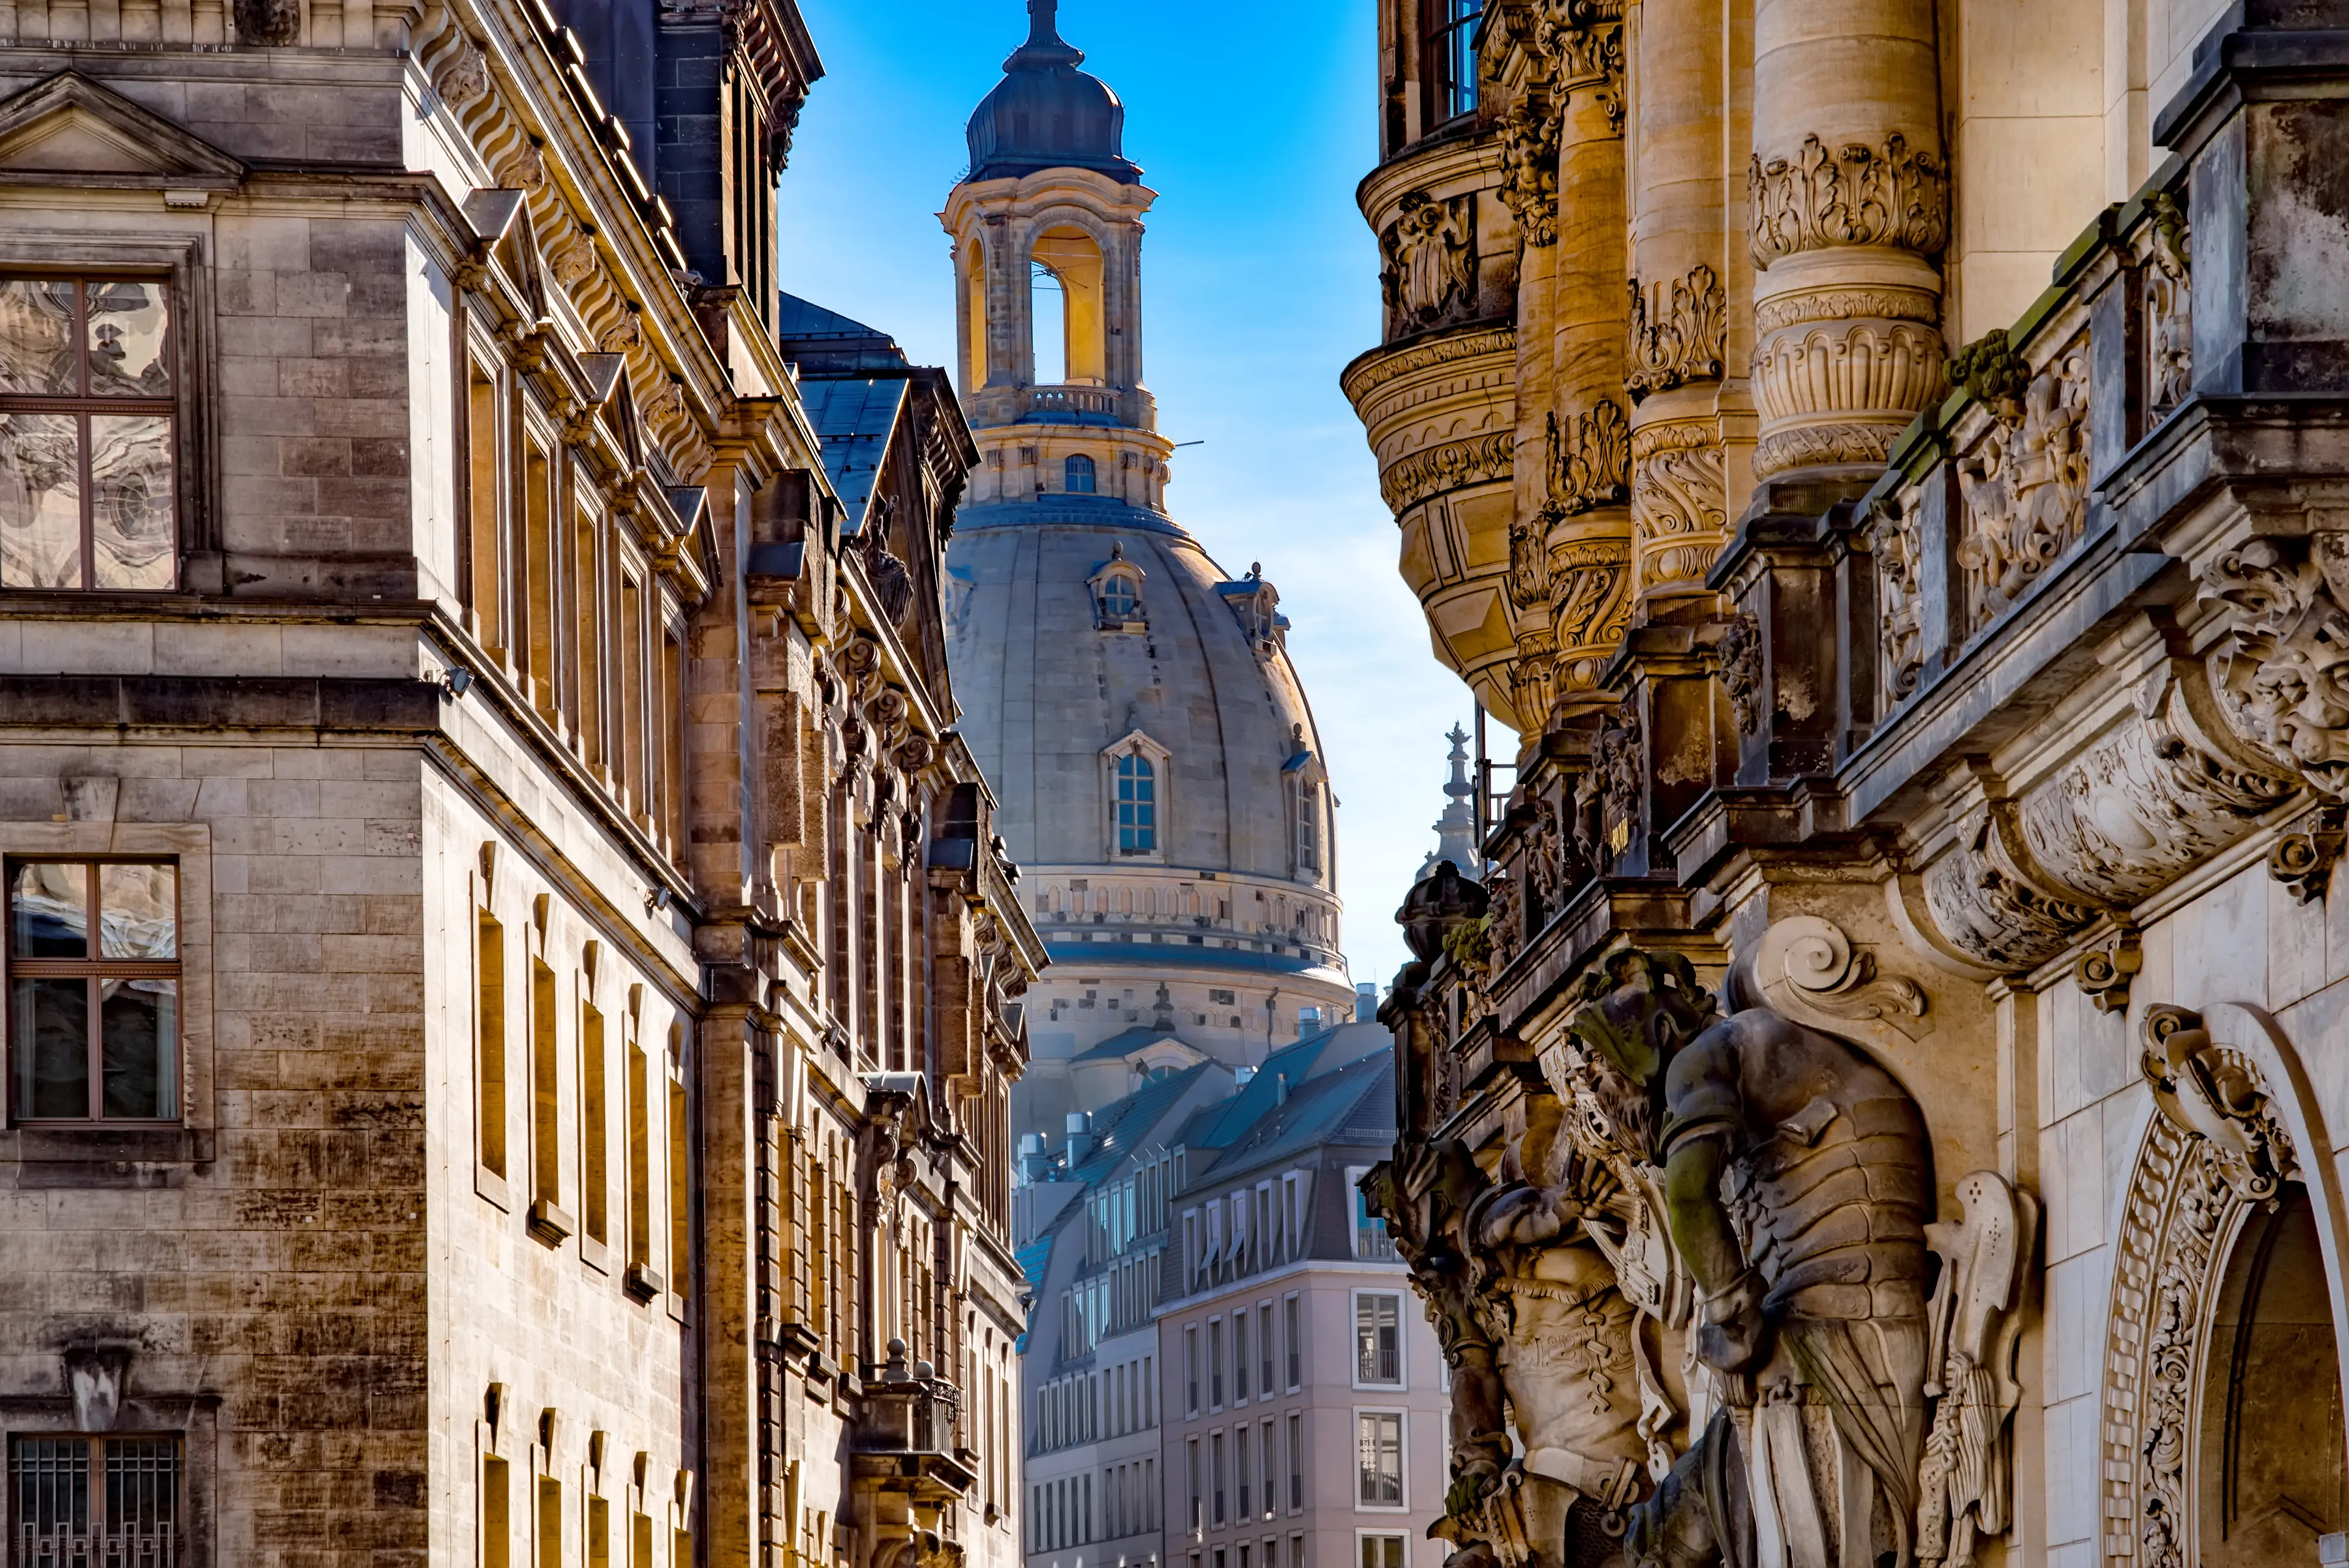 4-Day Romantic Dresden Escape: Relaxation & Unique Shopping Spots